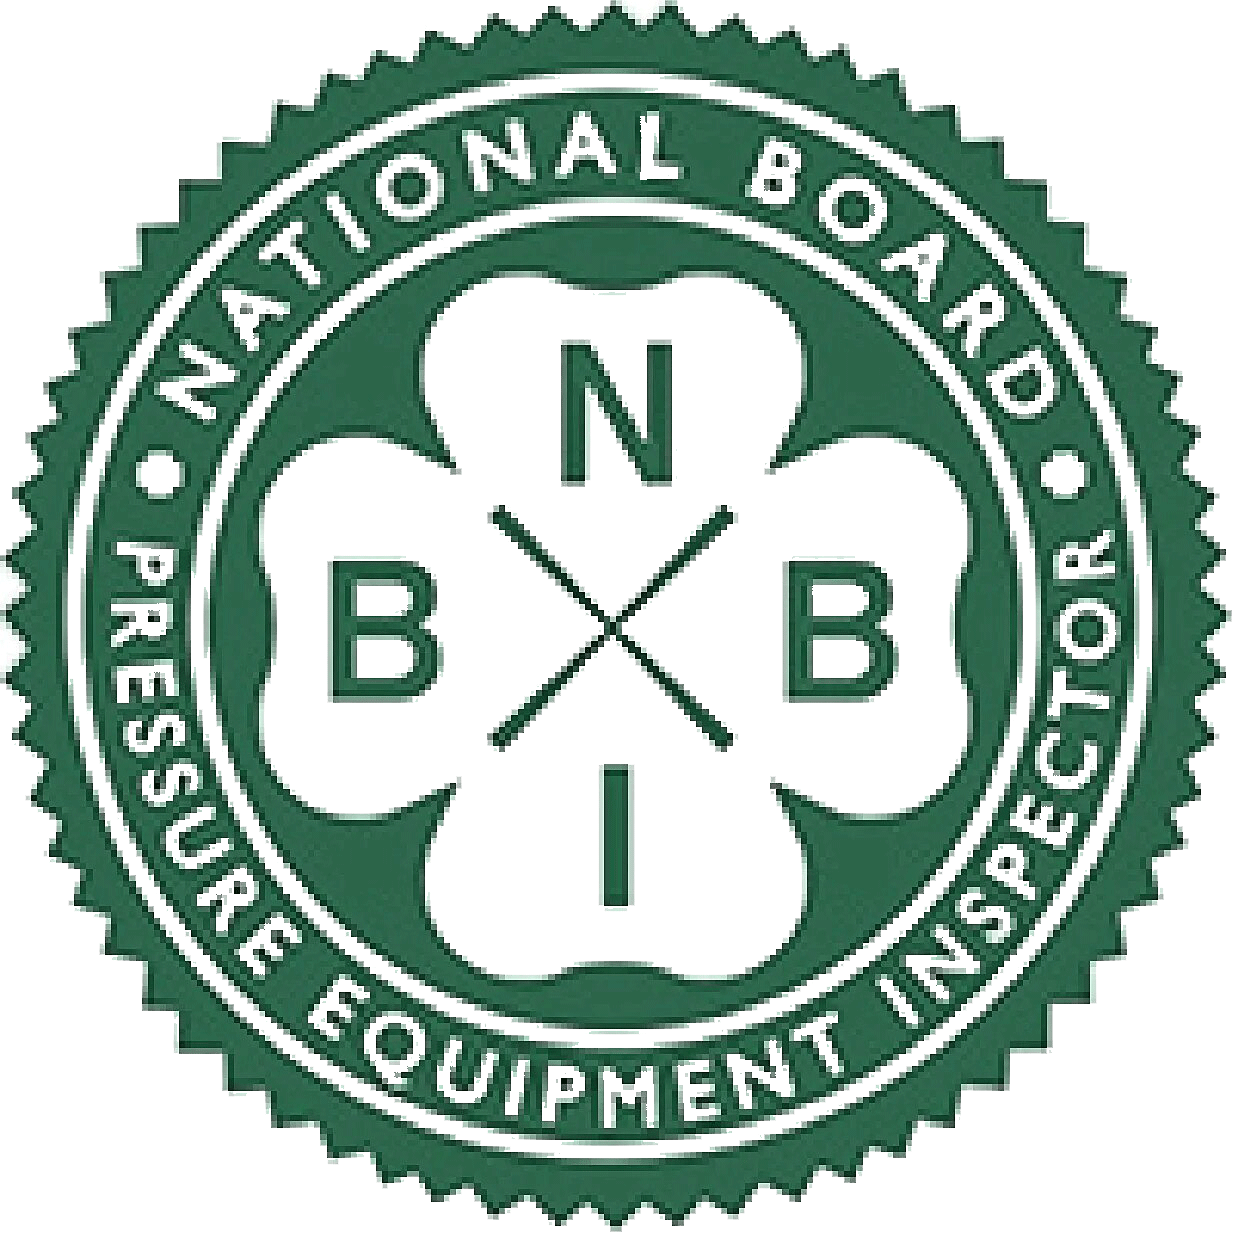 National Board